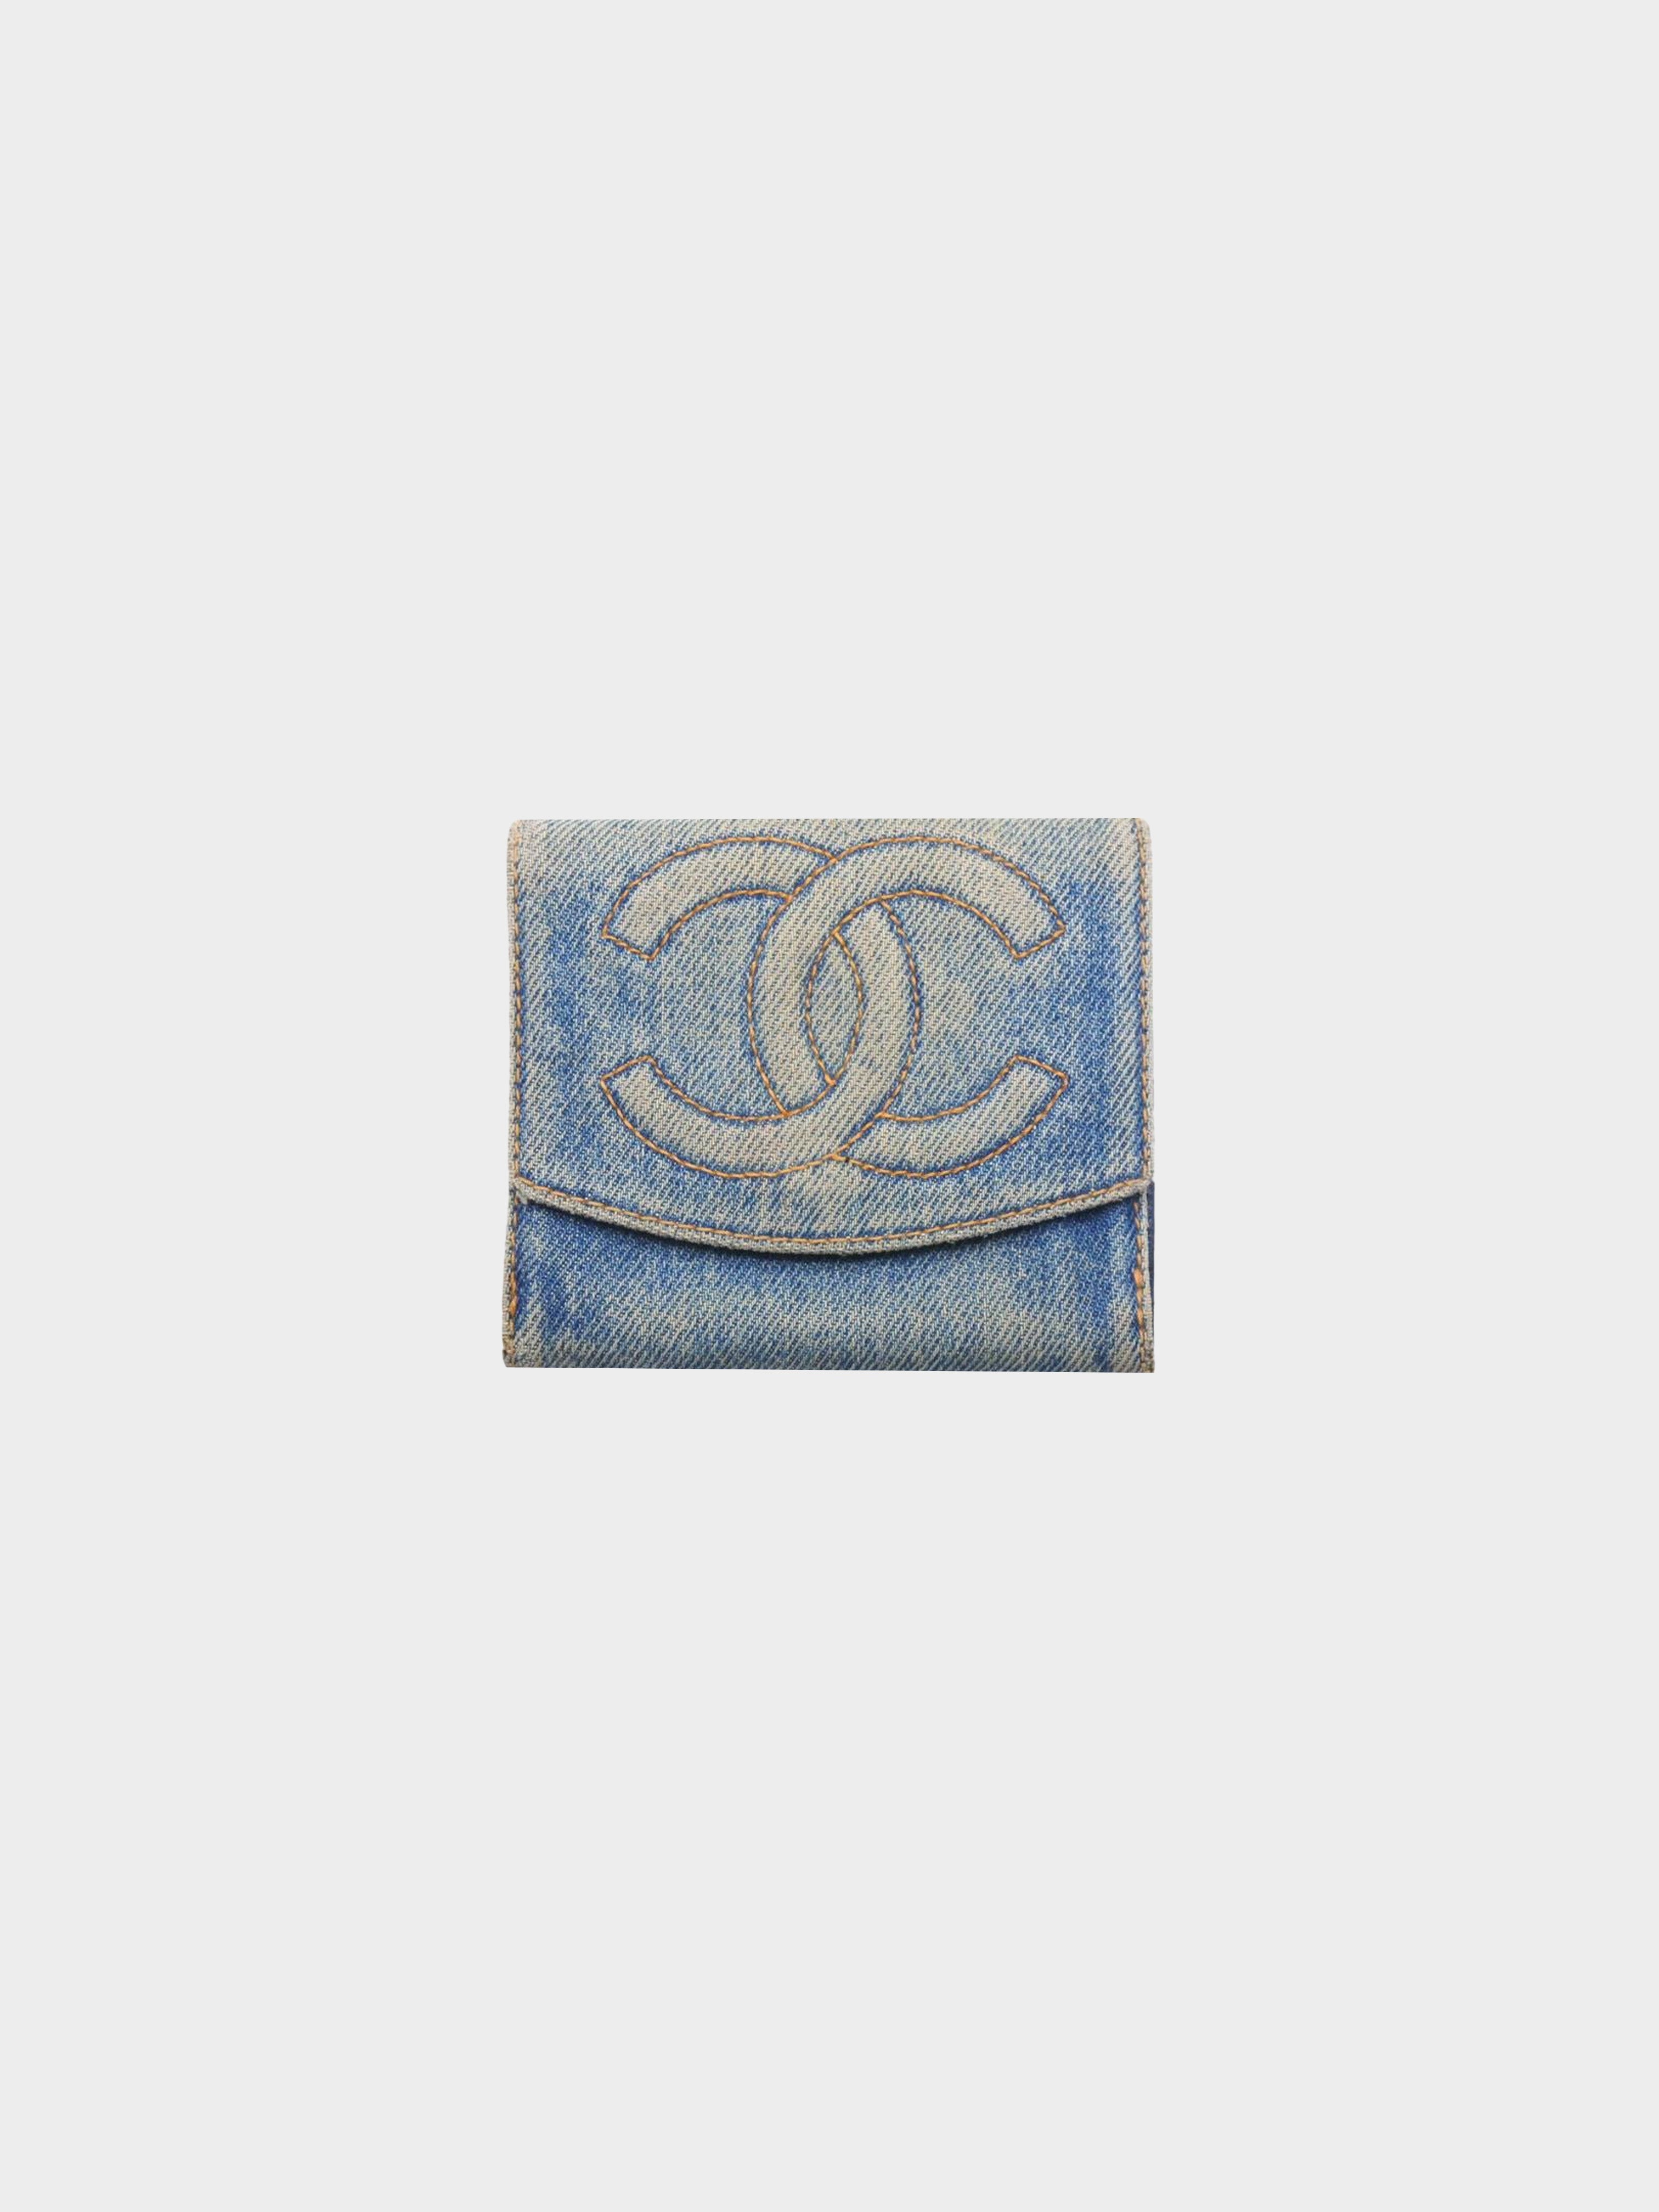 Chanel 1996-1997 Denim Logo Wallet